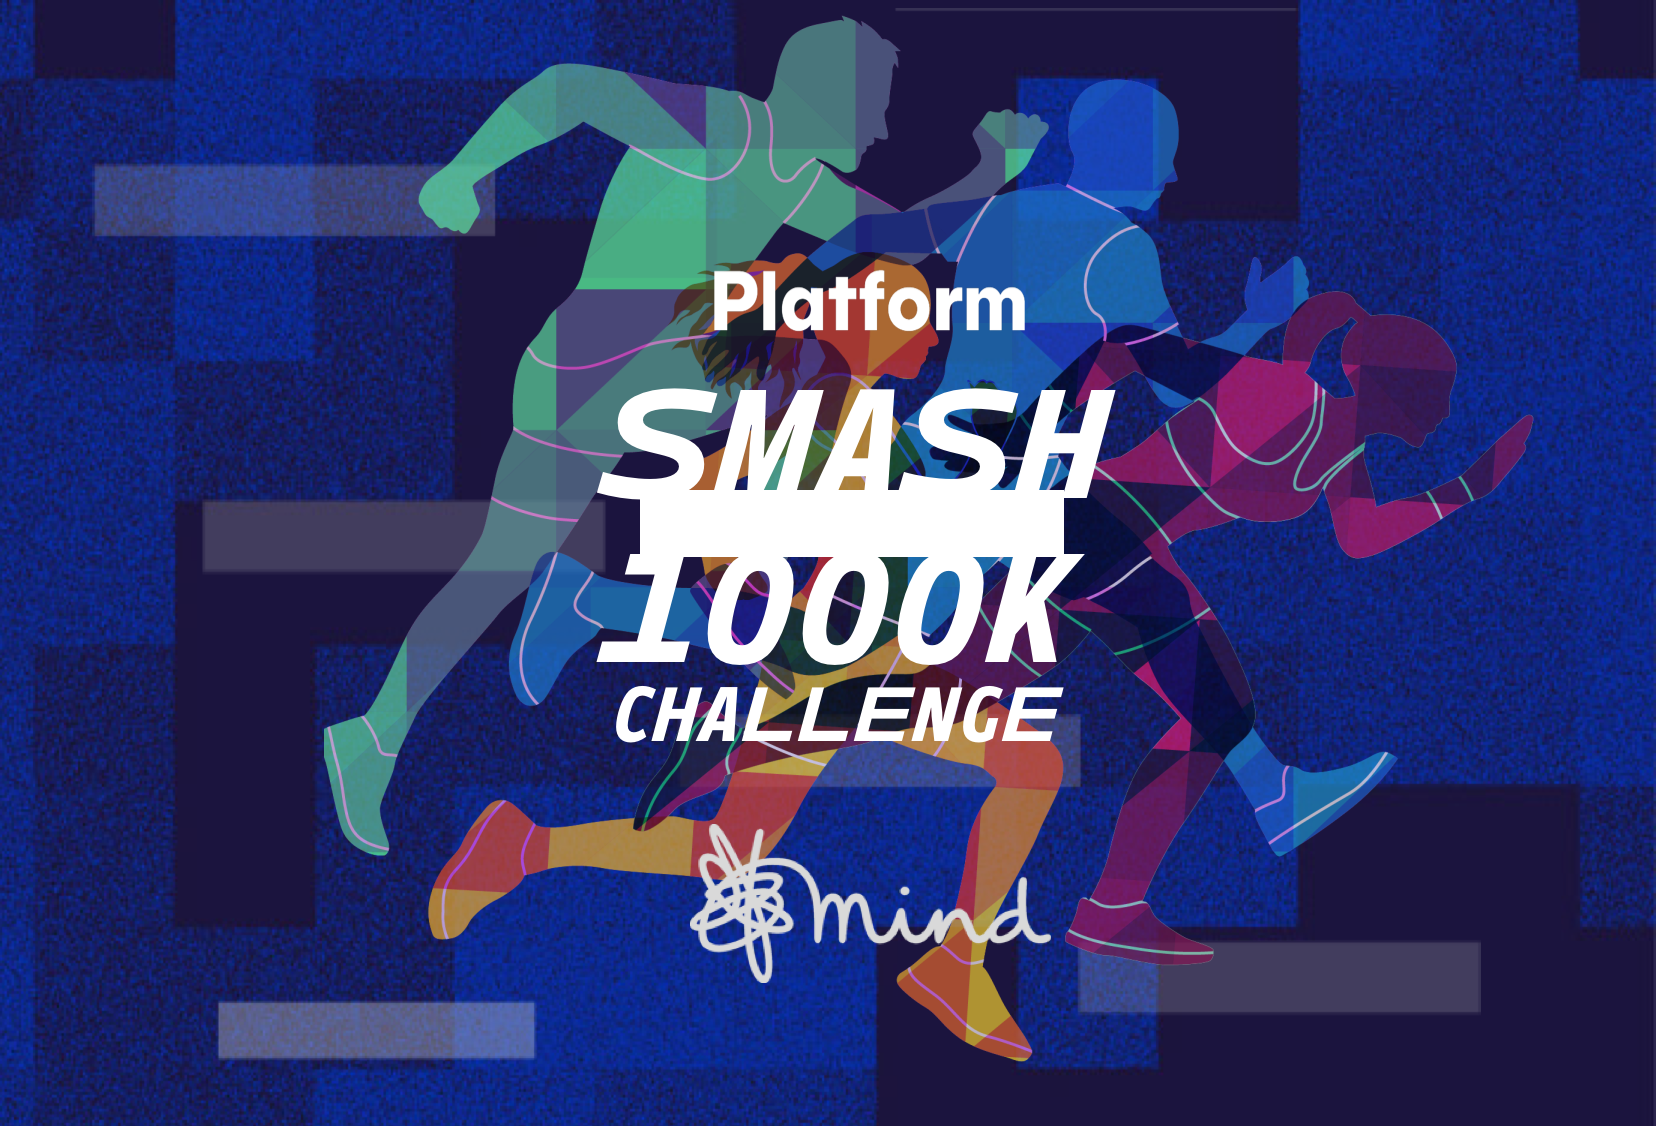 Platform Smash 100k Running Challenge